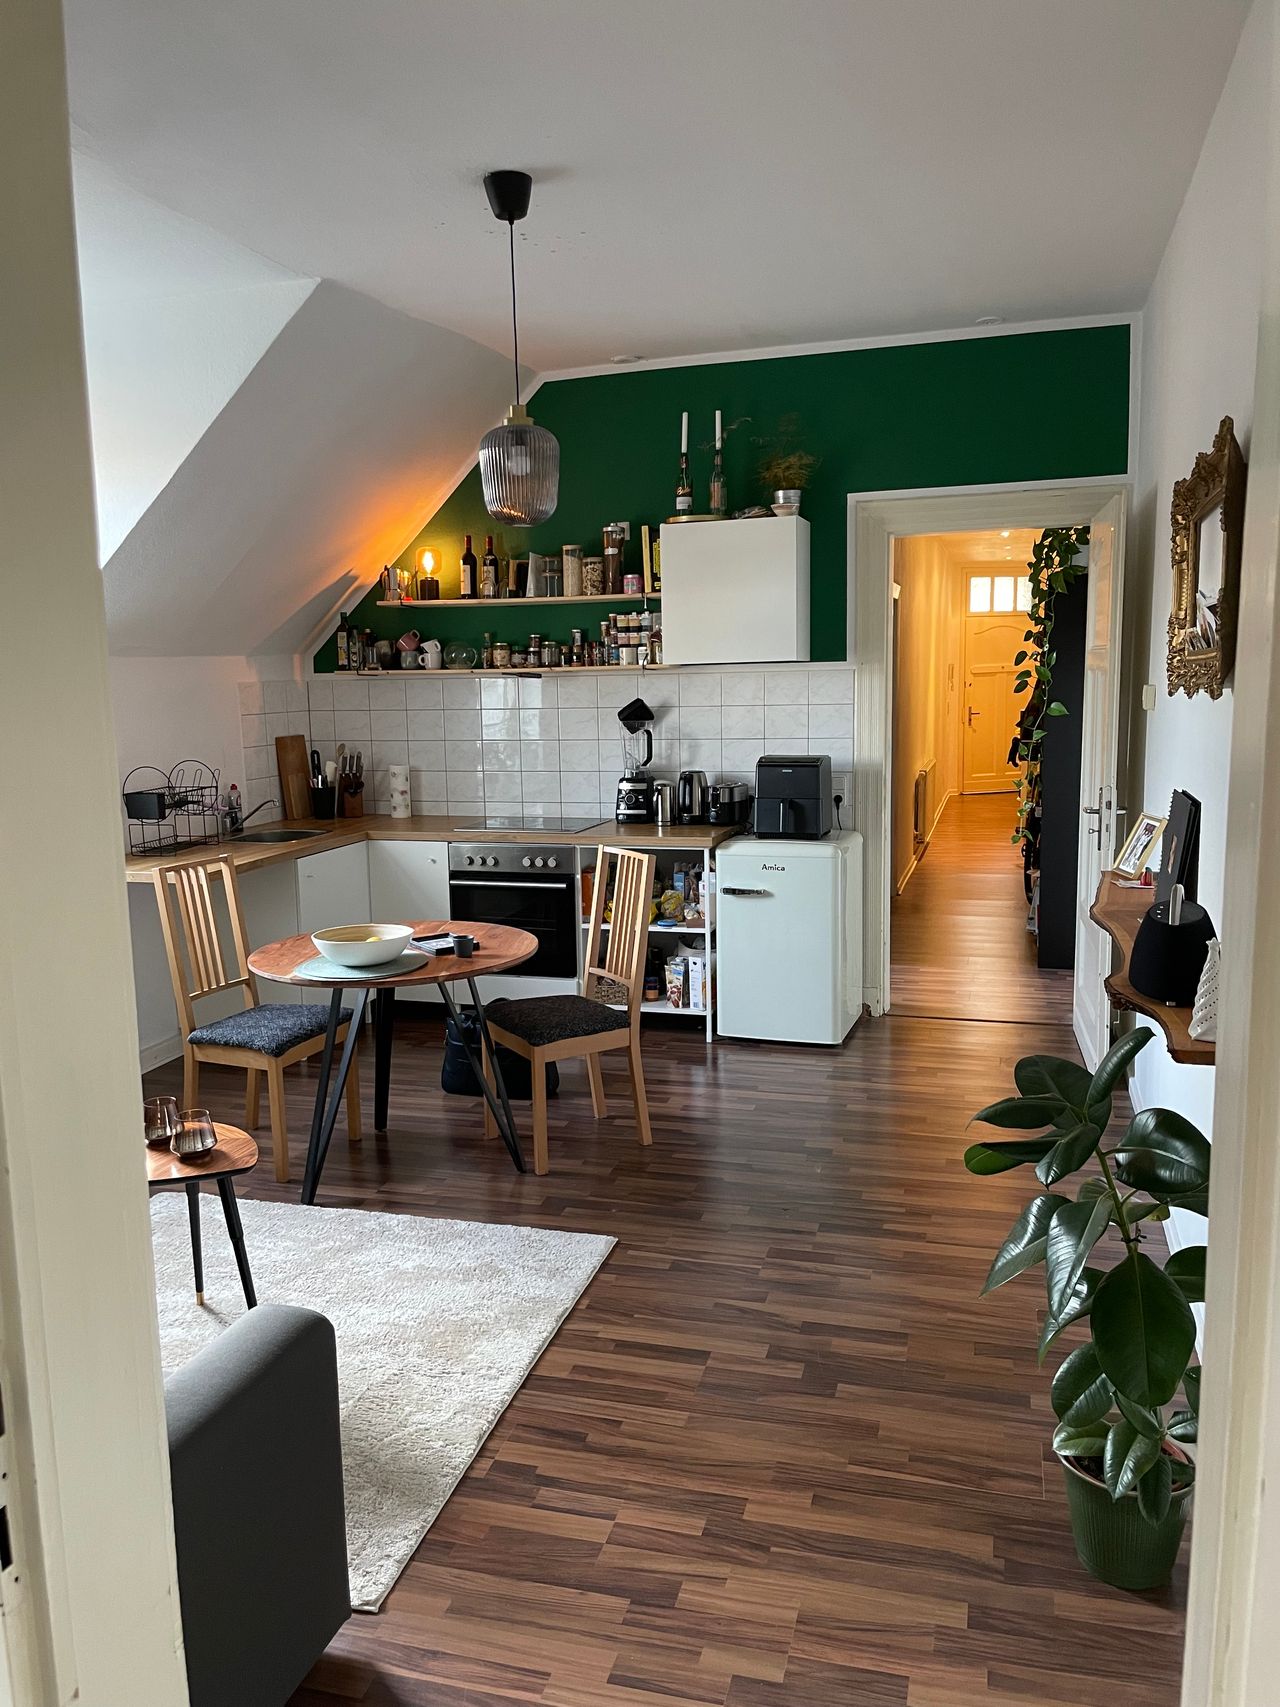 Cute and cozy flat located in Dortmund